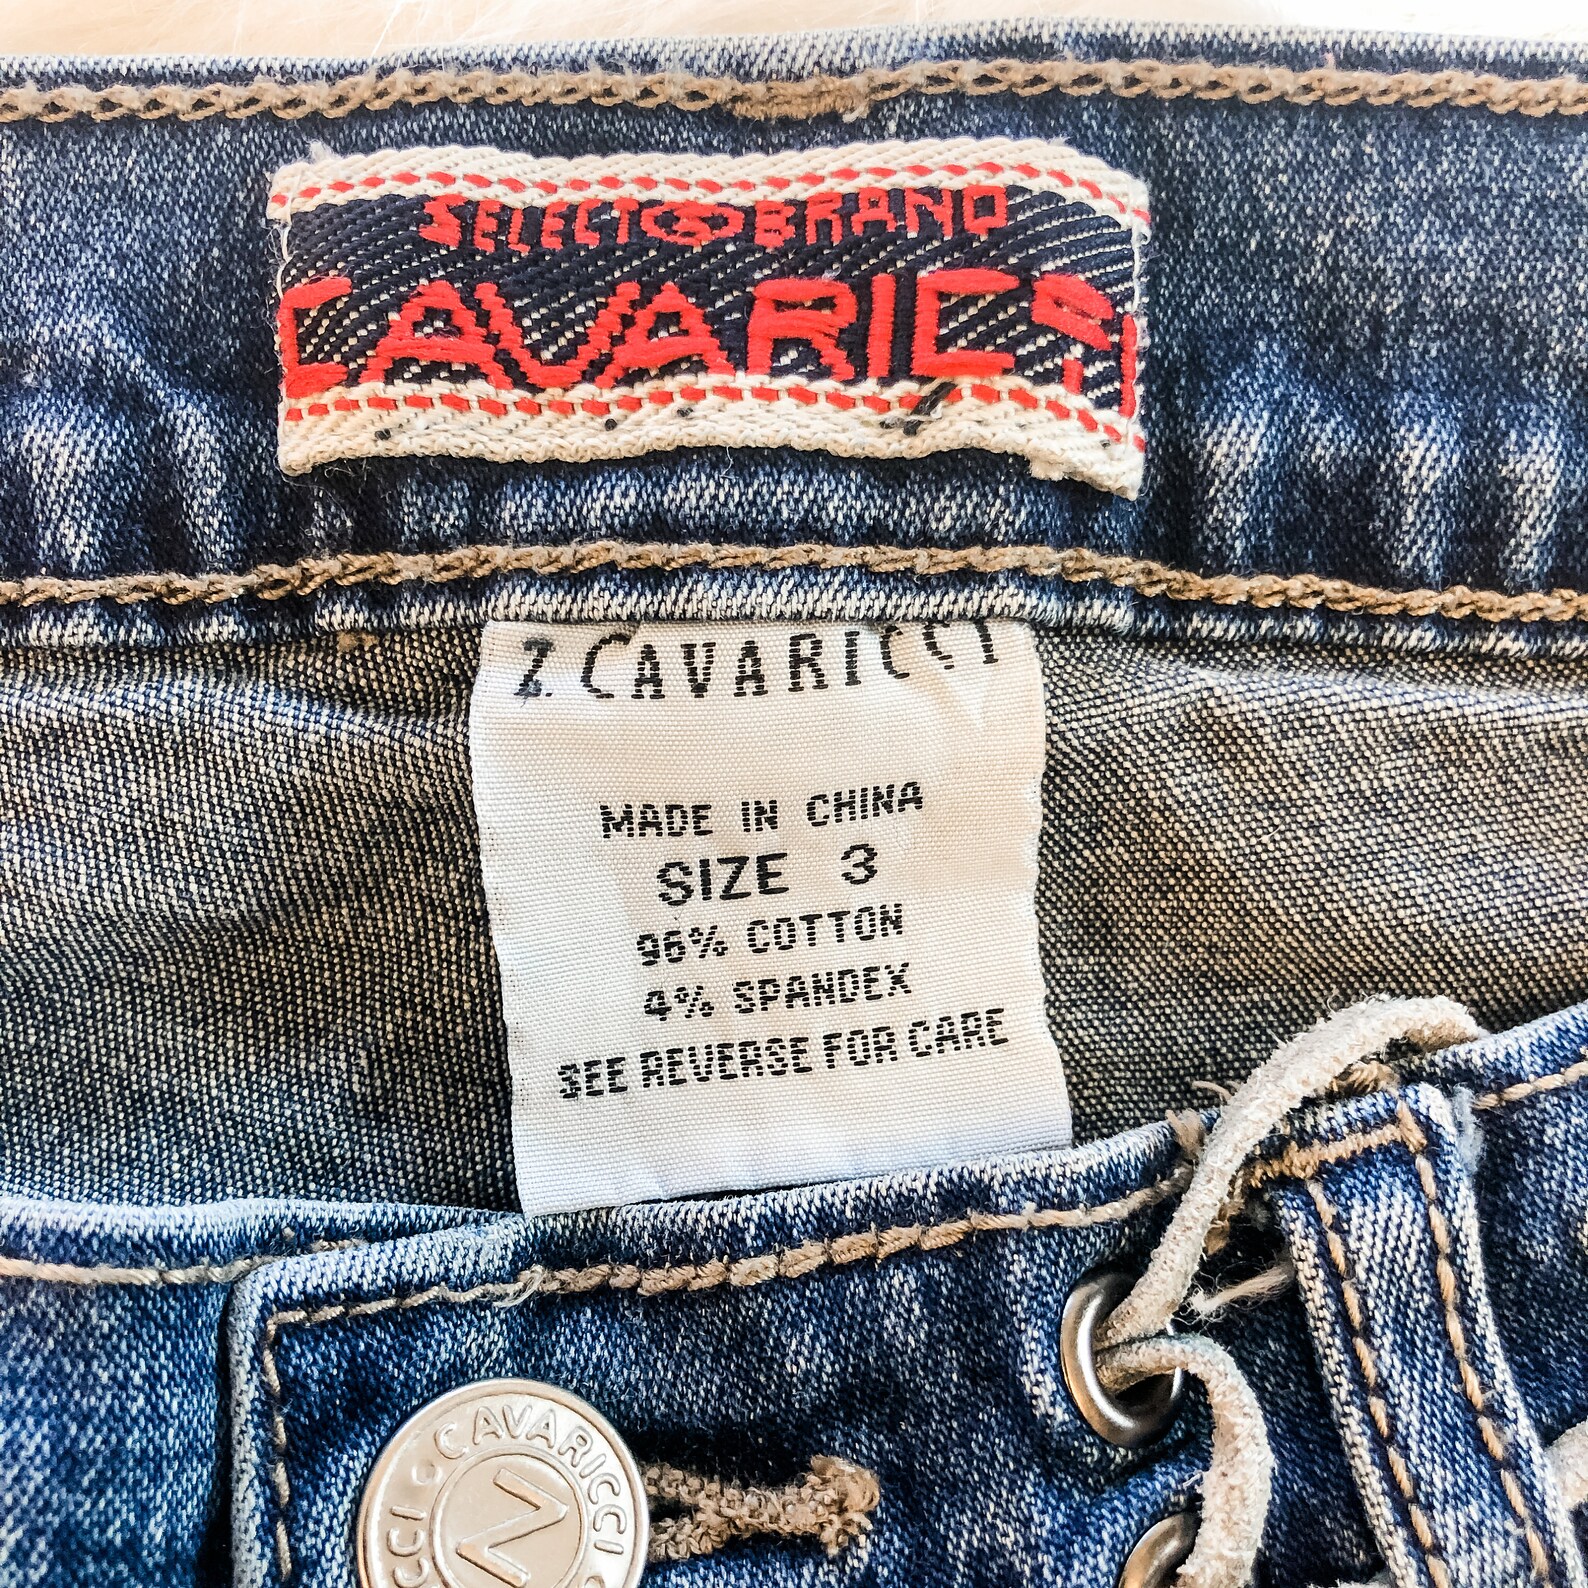 Z. Cavaricci Tasseled Vintage Jeans | Etsy